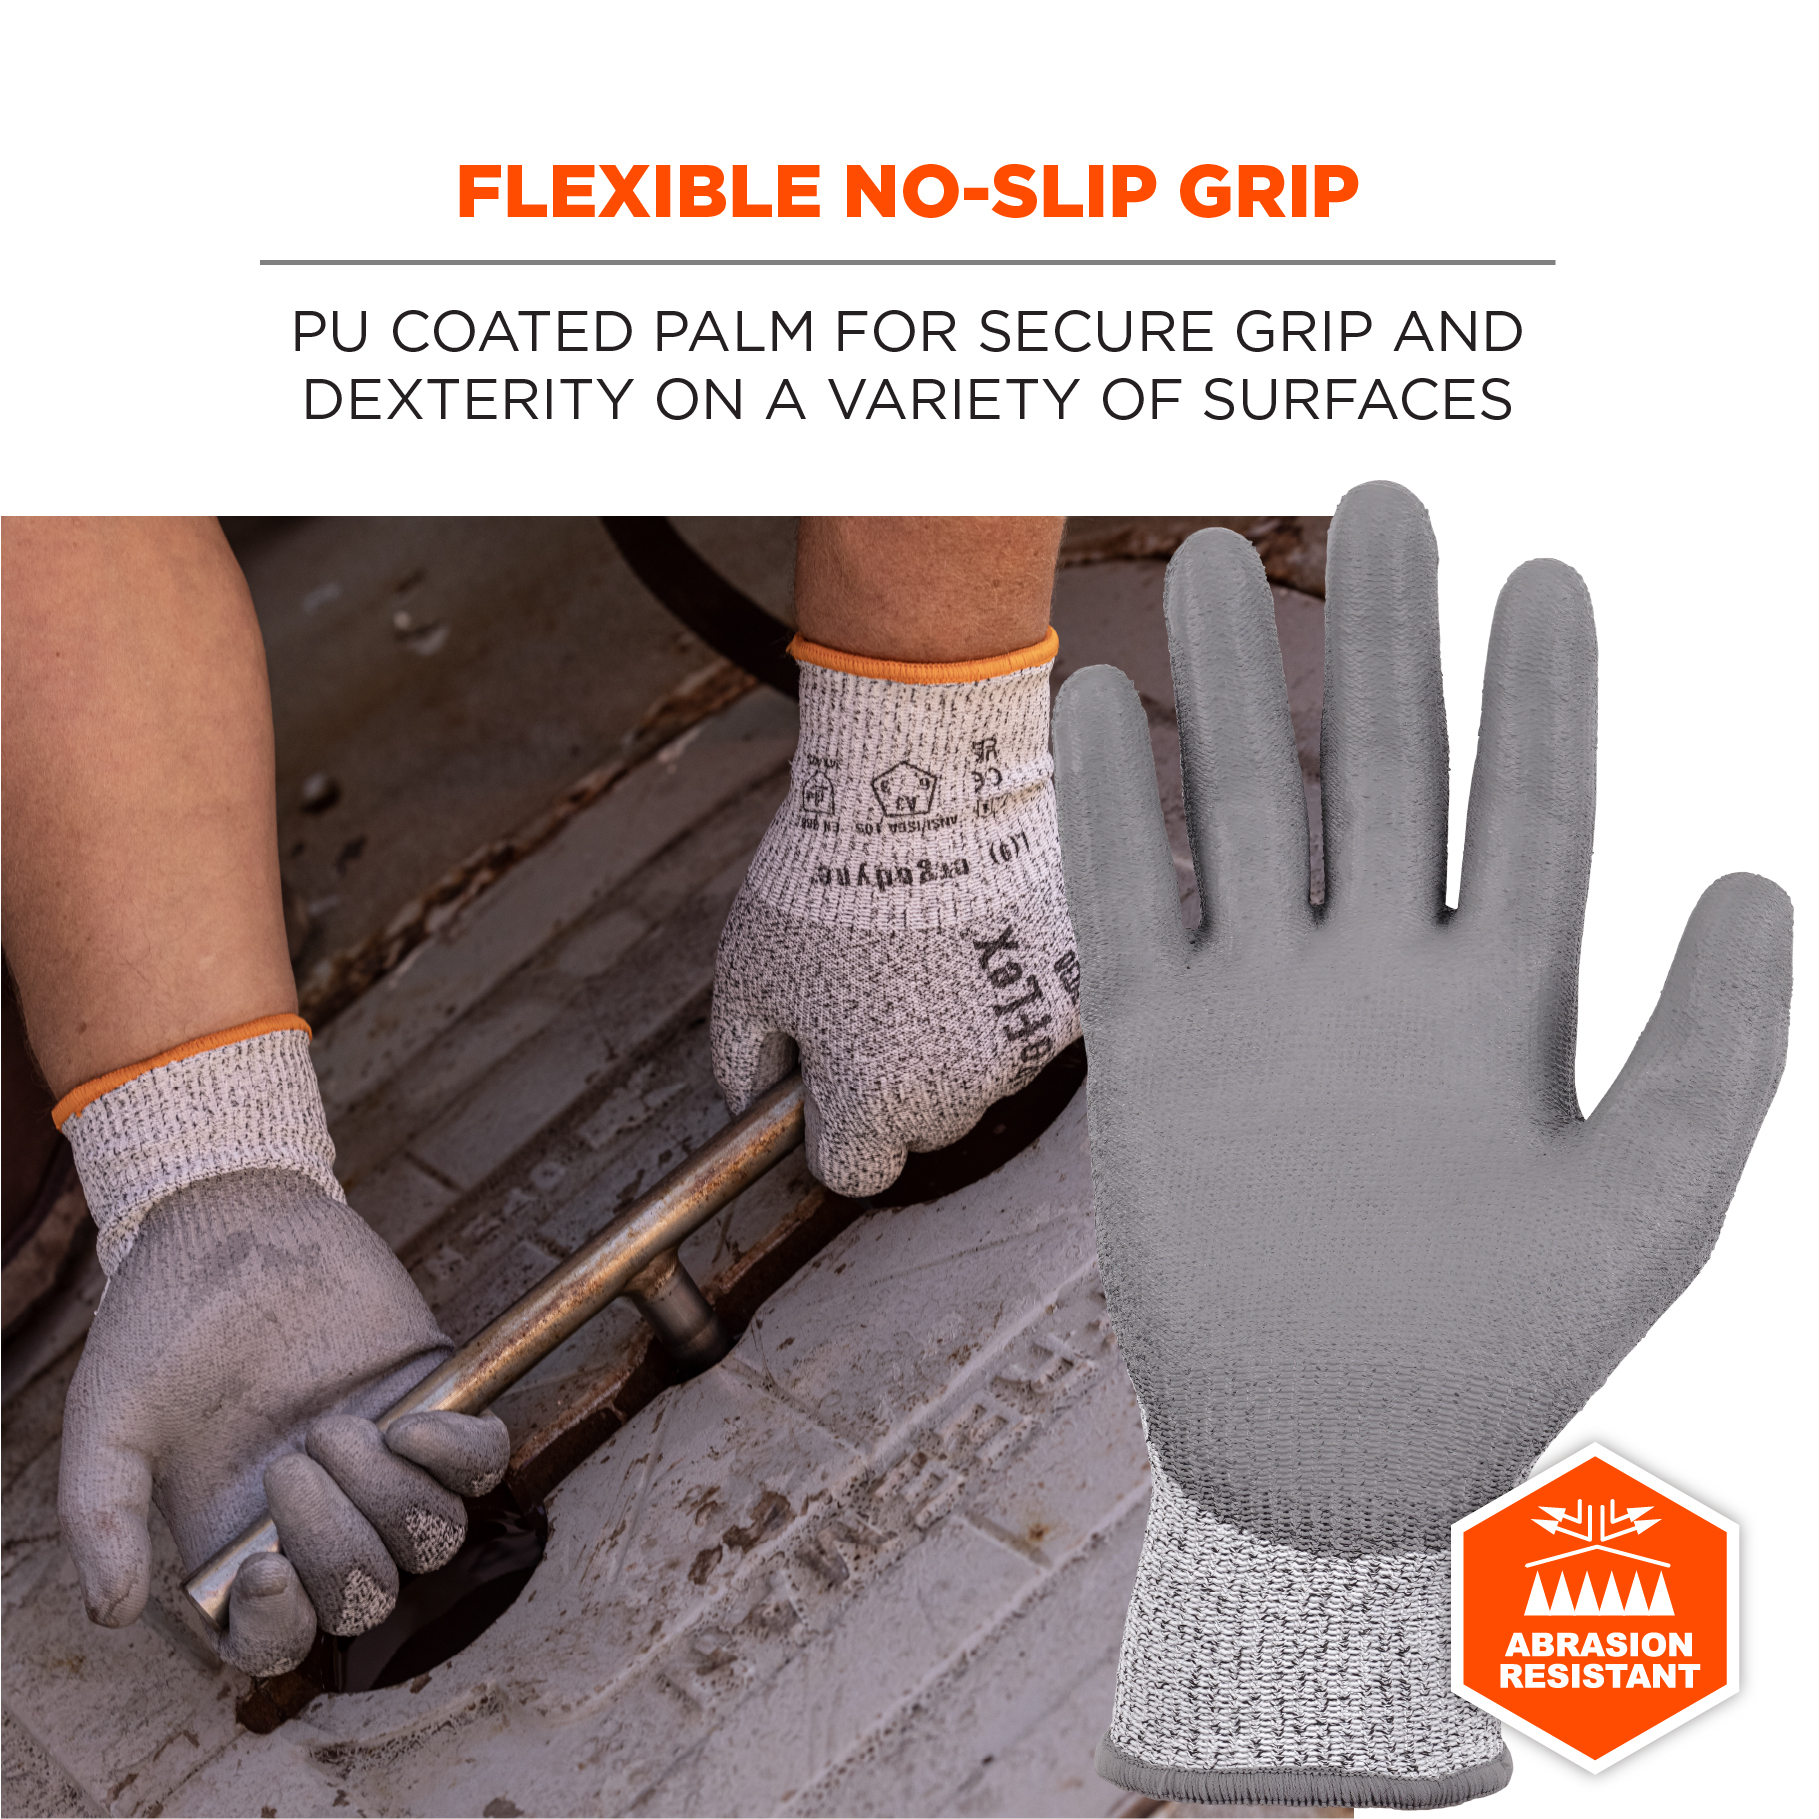 https://www.ergodyne.com/sites/default/files/product-images/10462-7030-ansi-a3-pu-coated-cr-gloves-gray-flexible-no-slip-grip_0.jpg